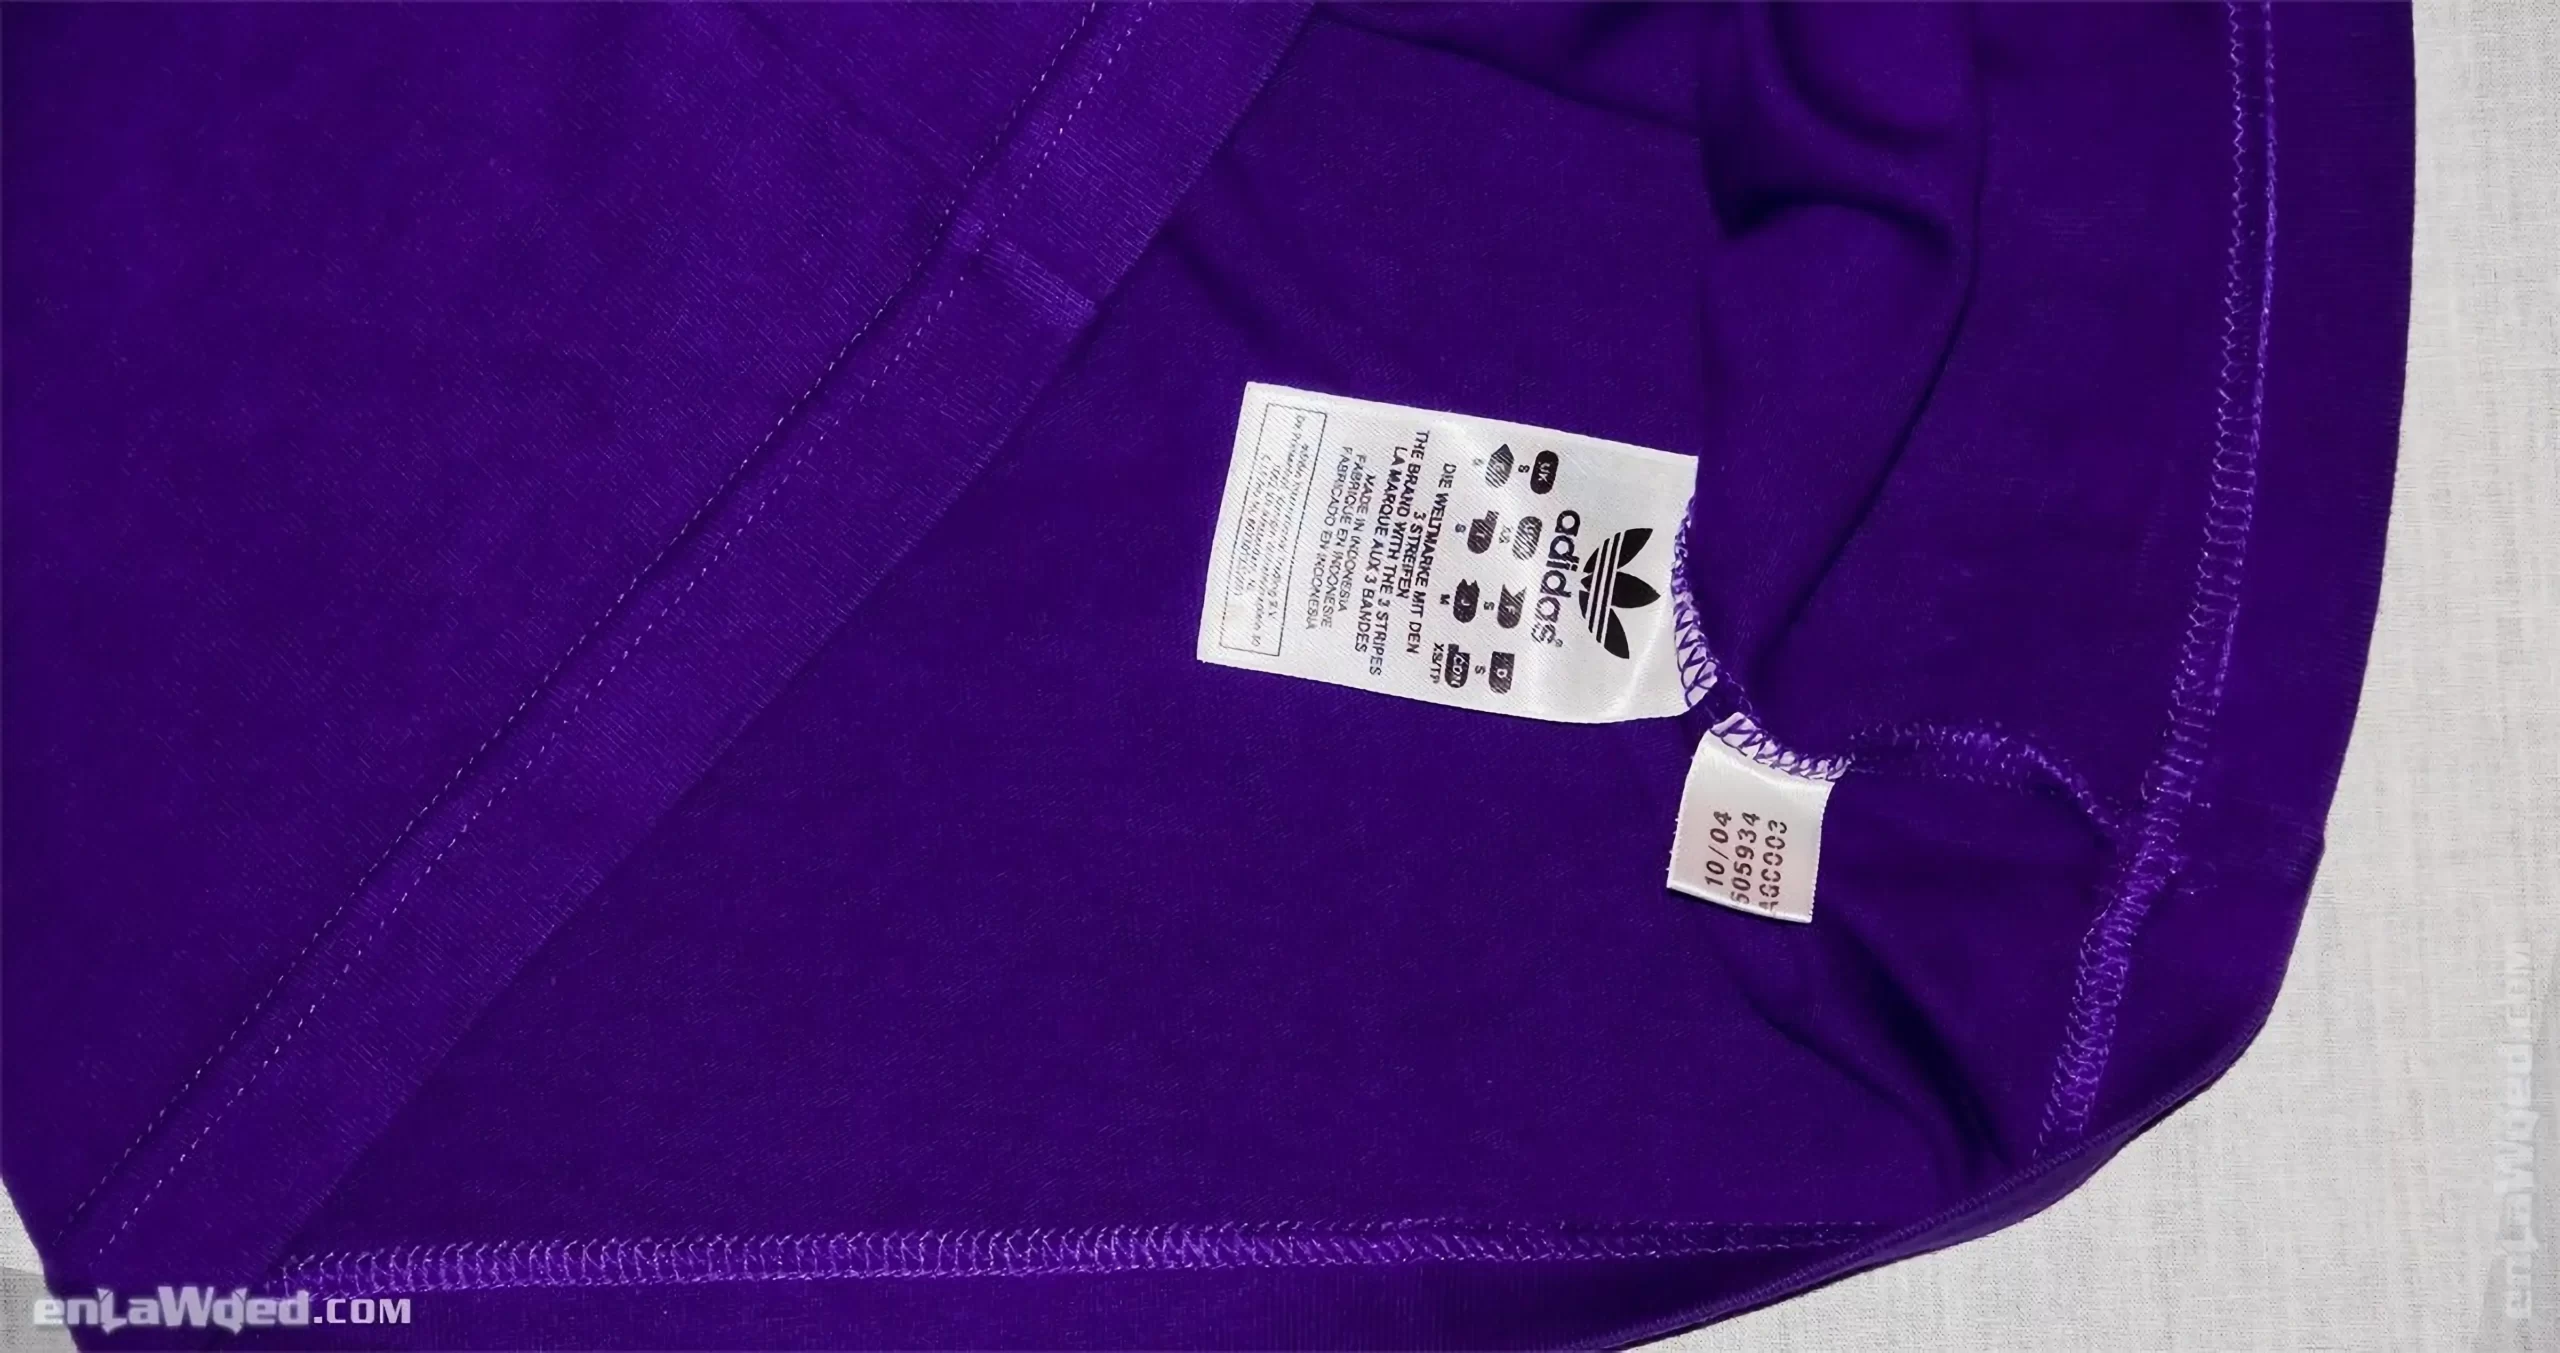 Men’s 2004 SkyHook Lakers #33 T-Shirt by Adidas: Unburdened (EnLawded.com file #lmchk90349ip2y124409kg9st)